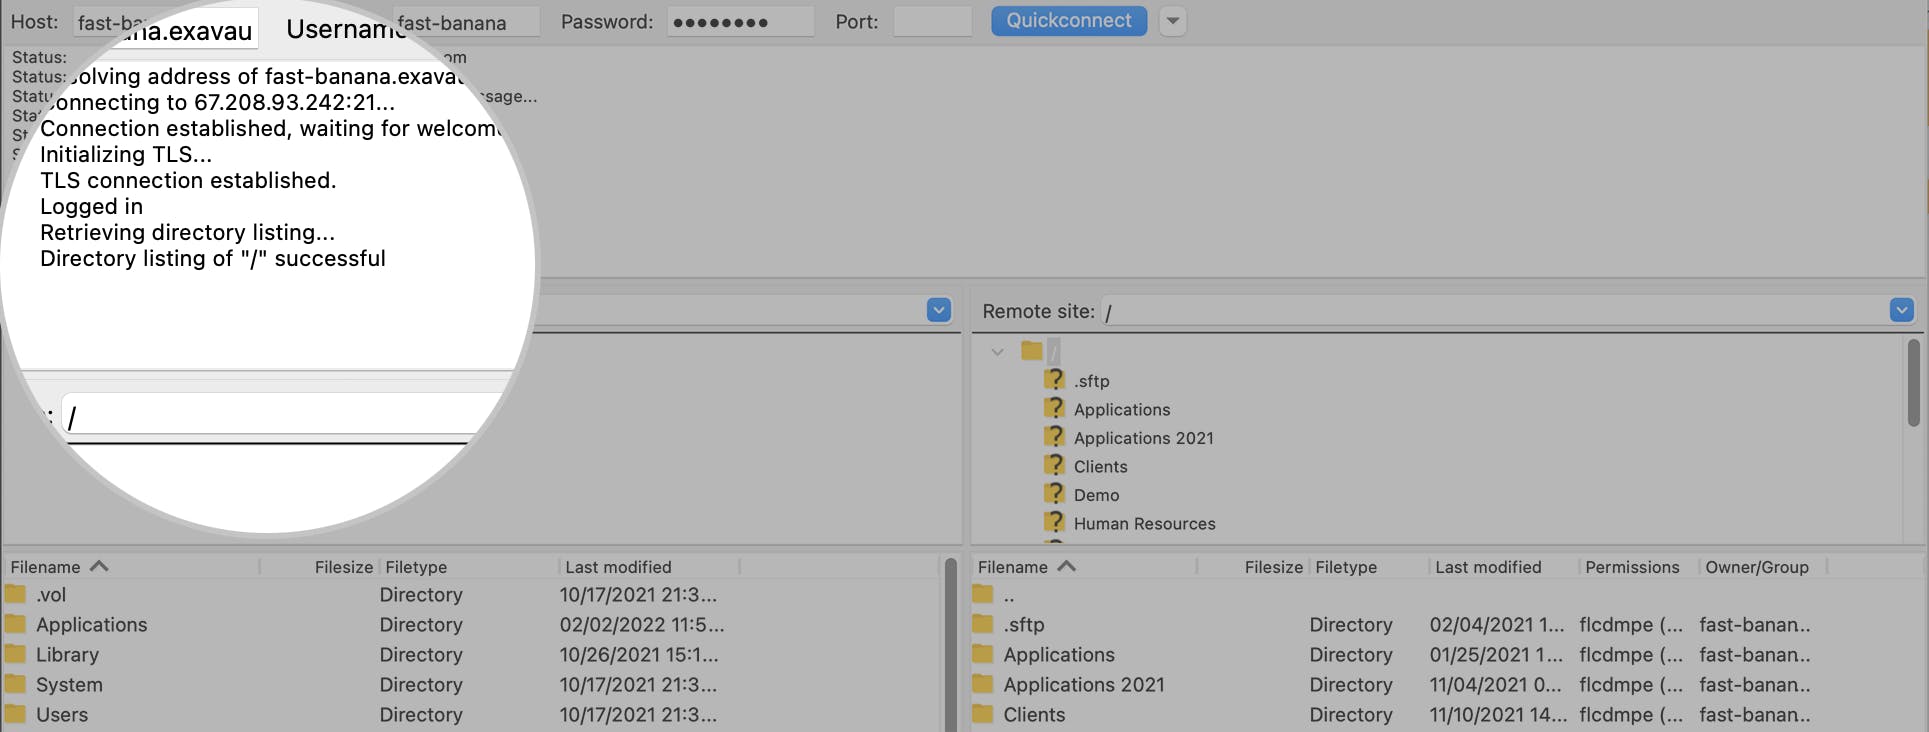 Screen shot showing FileZilla connecting.